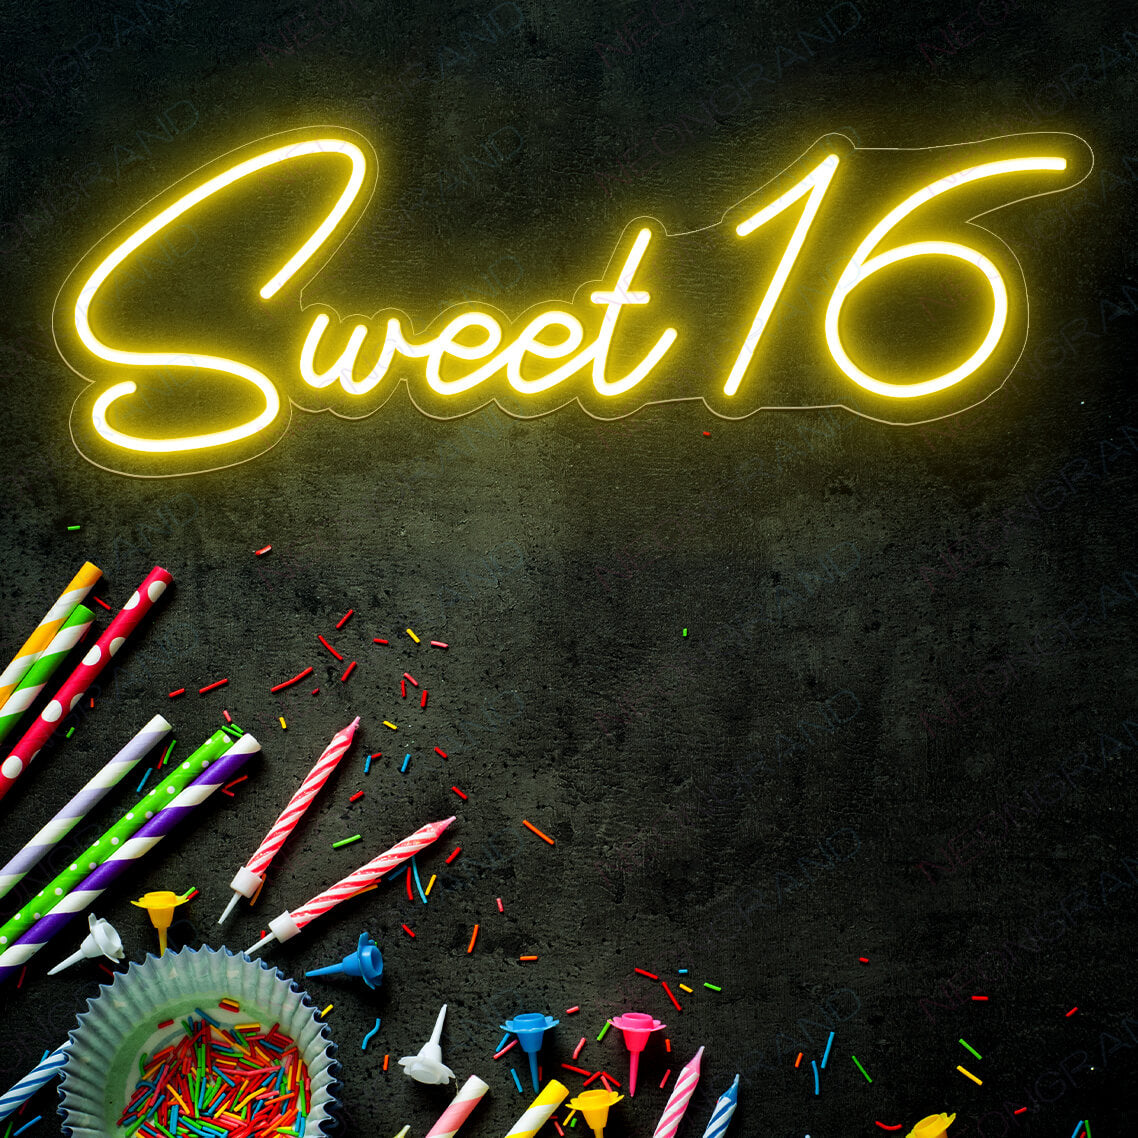 Sweet 16 Neon Sign Happy Birthday Led Light yellow